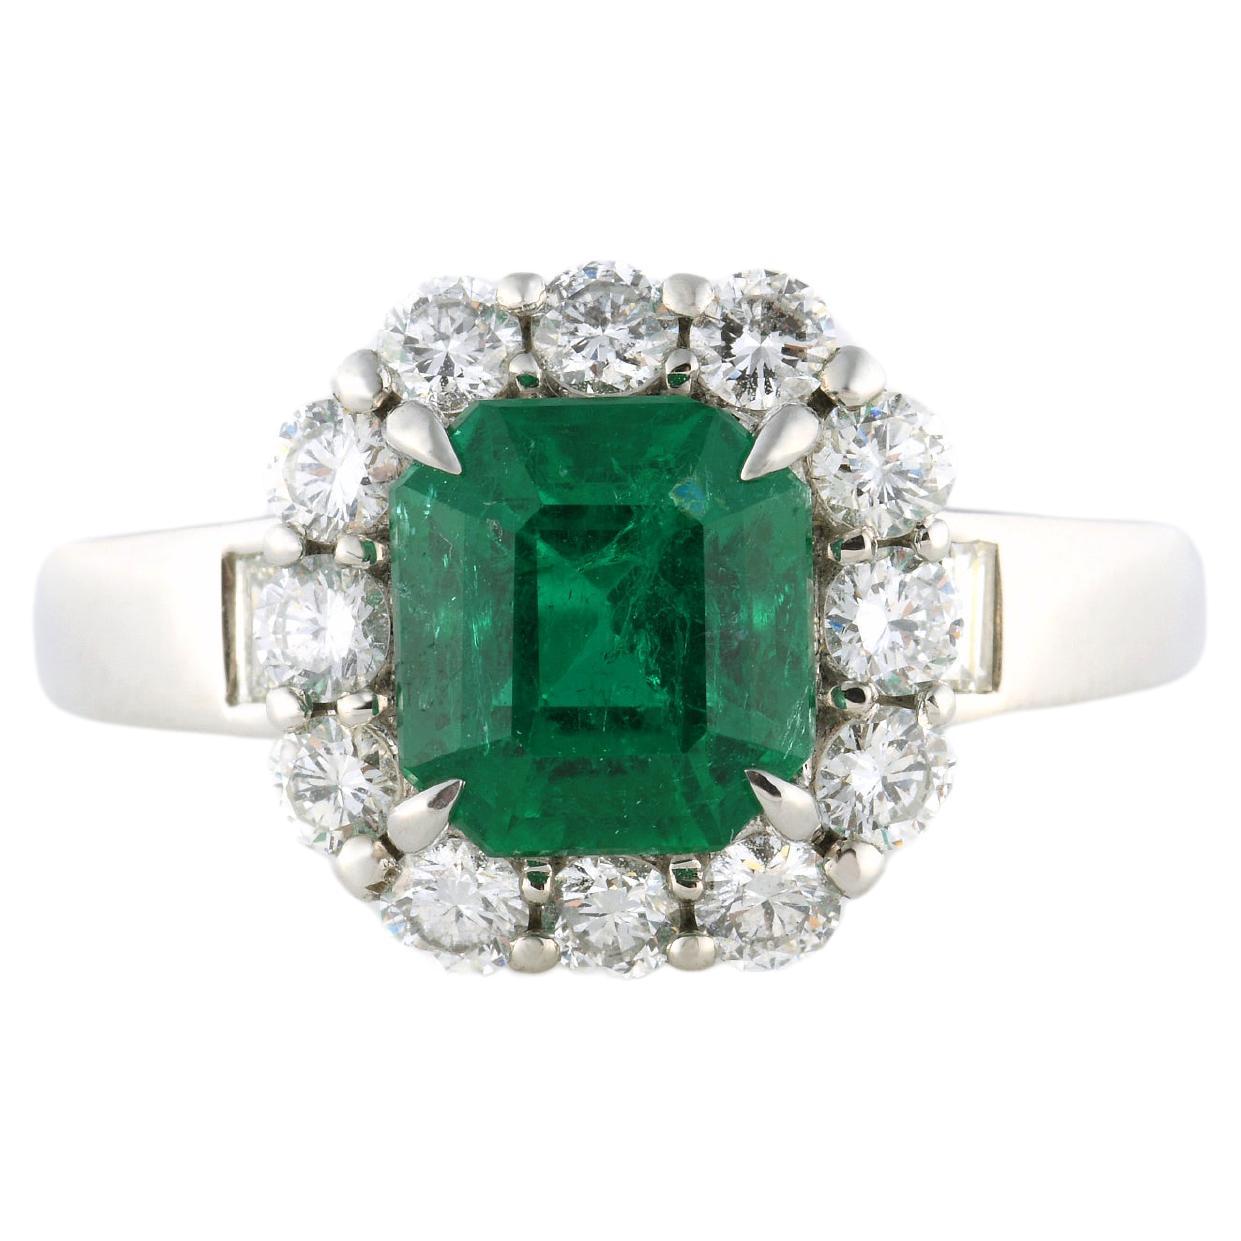 GRS Certified 1.87 ct Muzo "Vivid Green" Colombian Emerald Ring